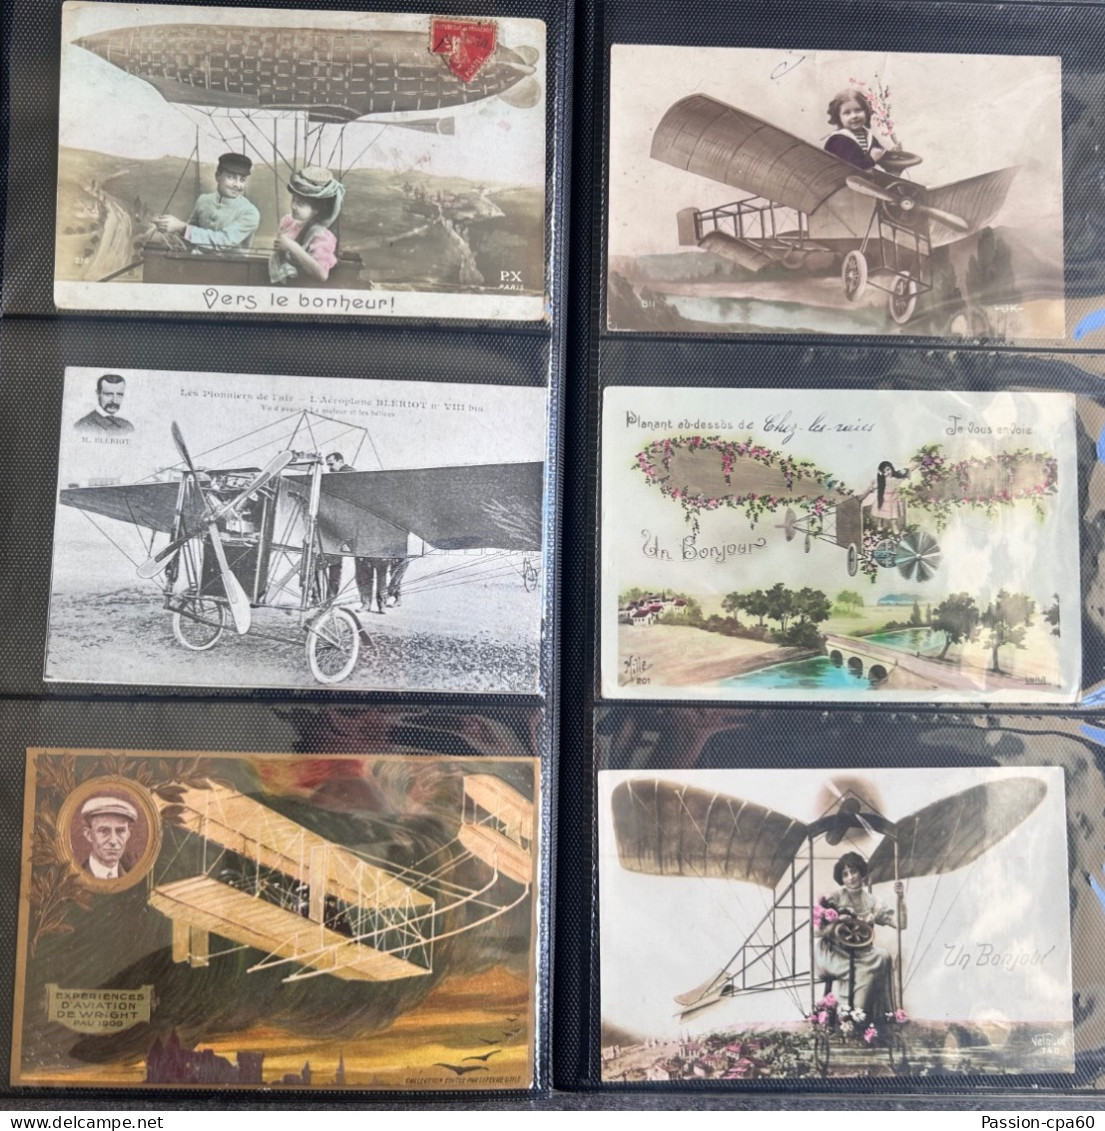 Gros lot de 4 Albums de Cartes Postales Anciennes